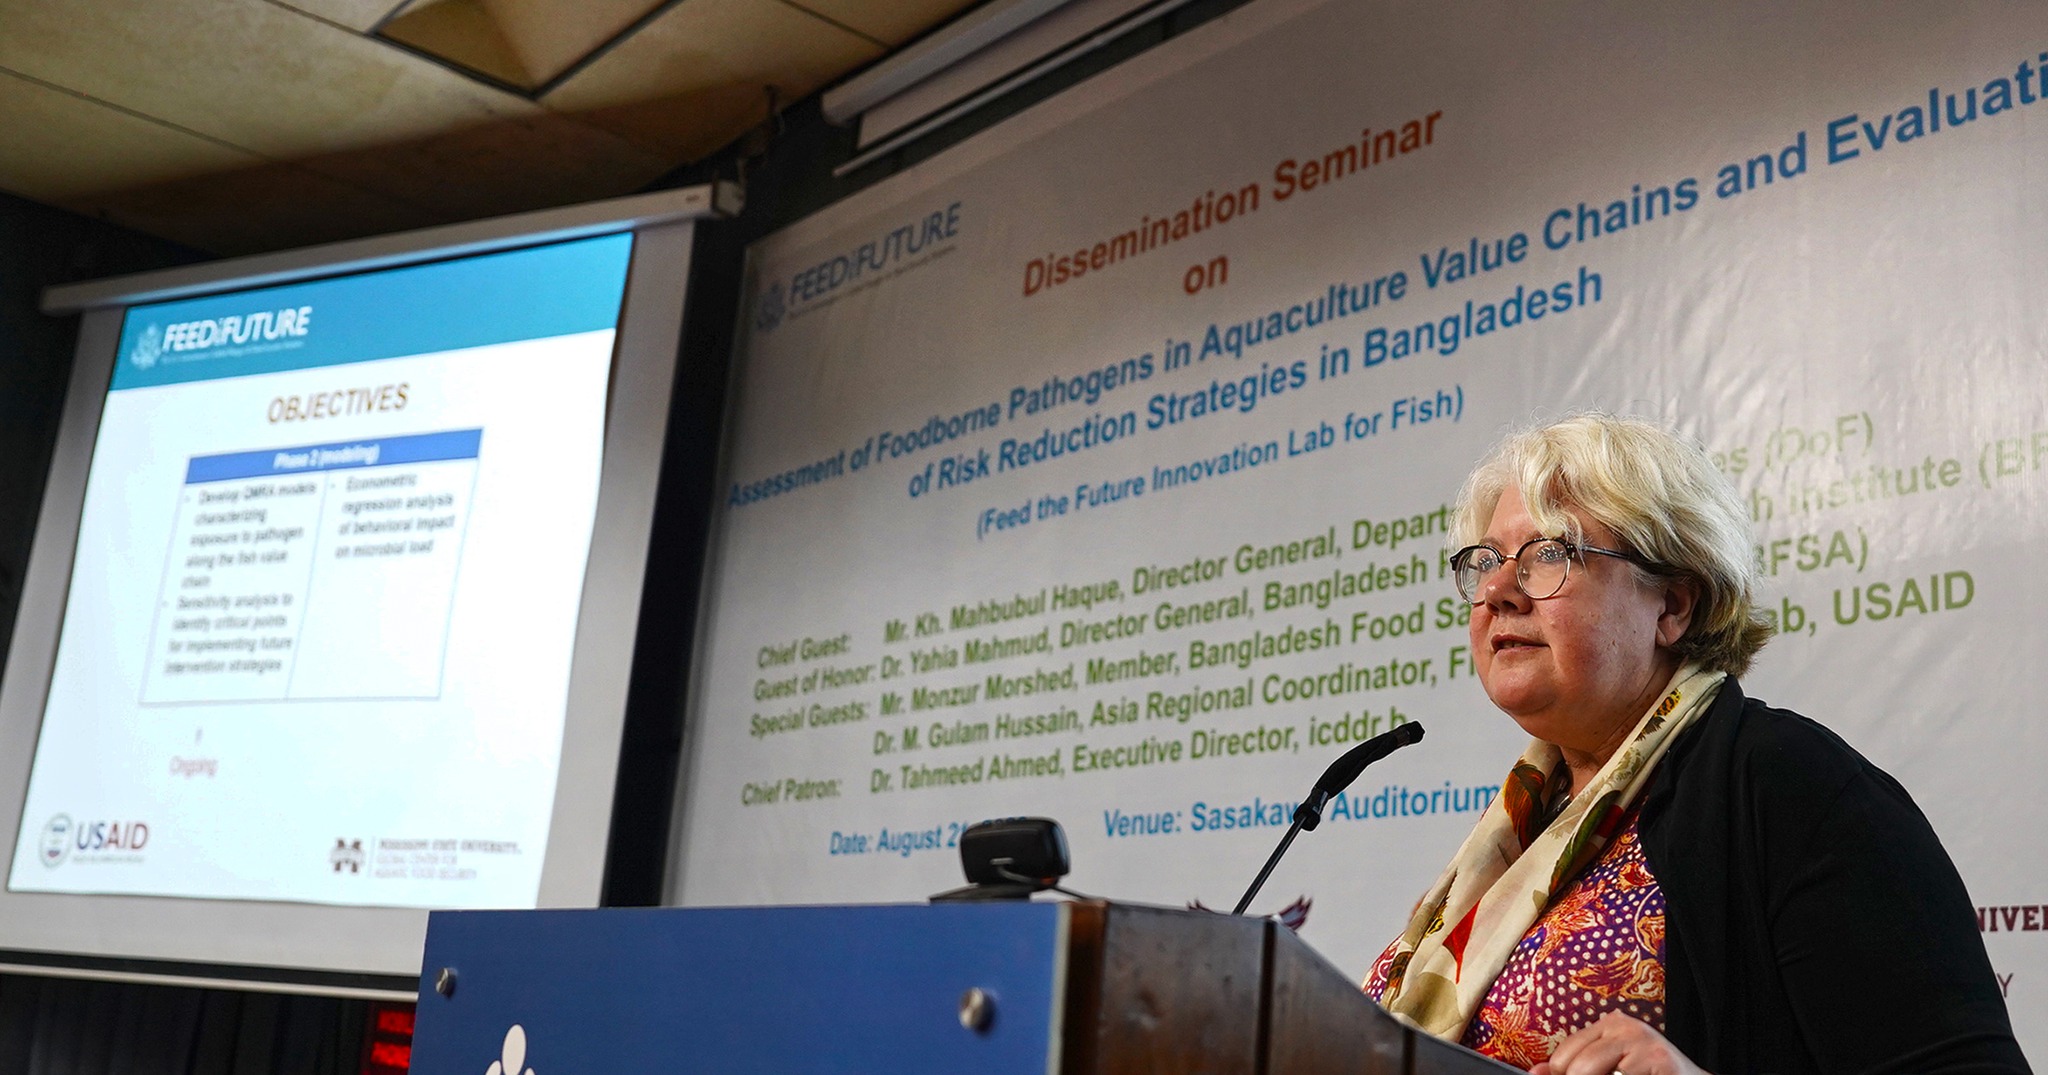 Dr. Clare Narrod making a presentation in Bangladesh.